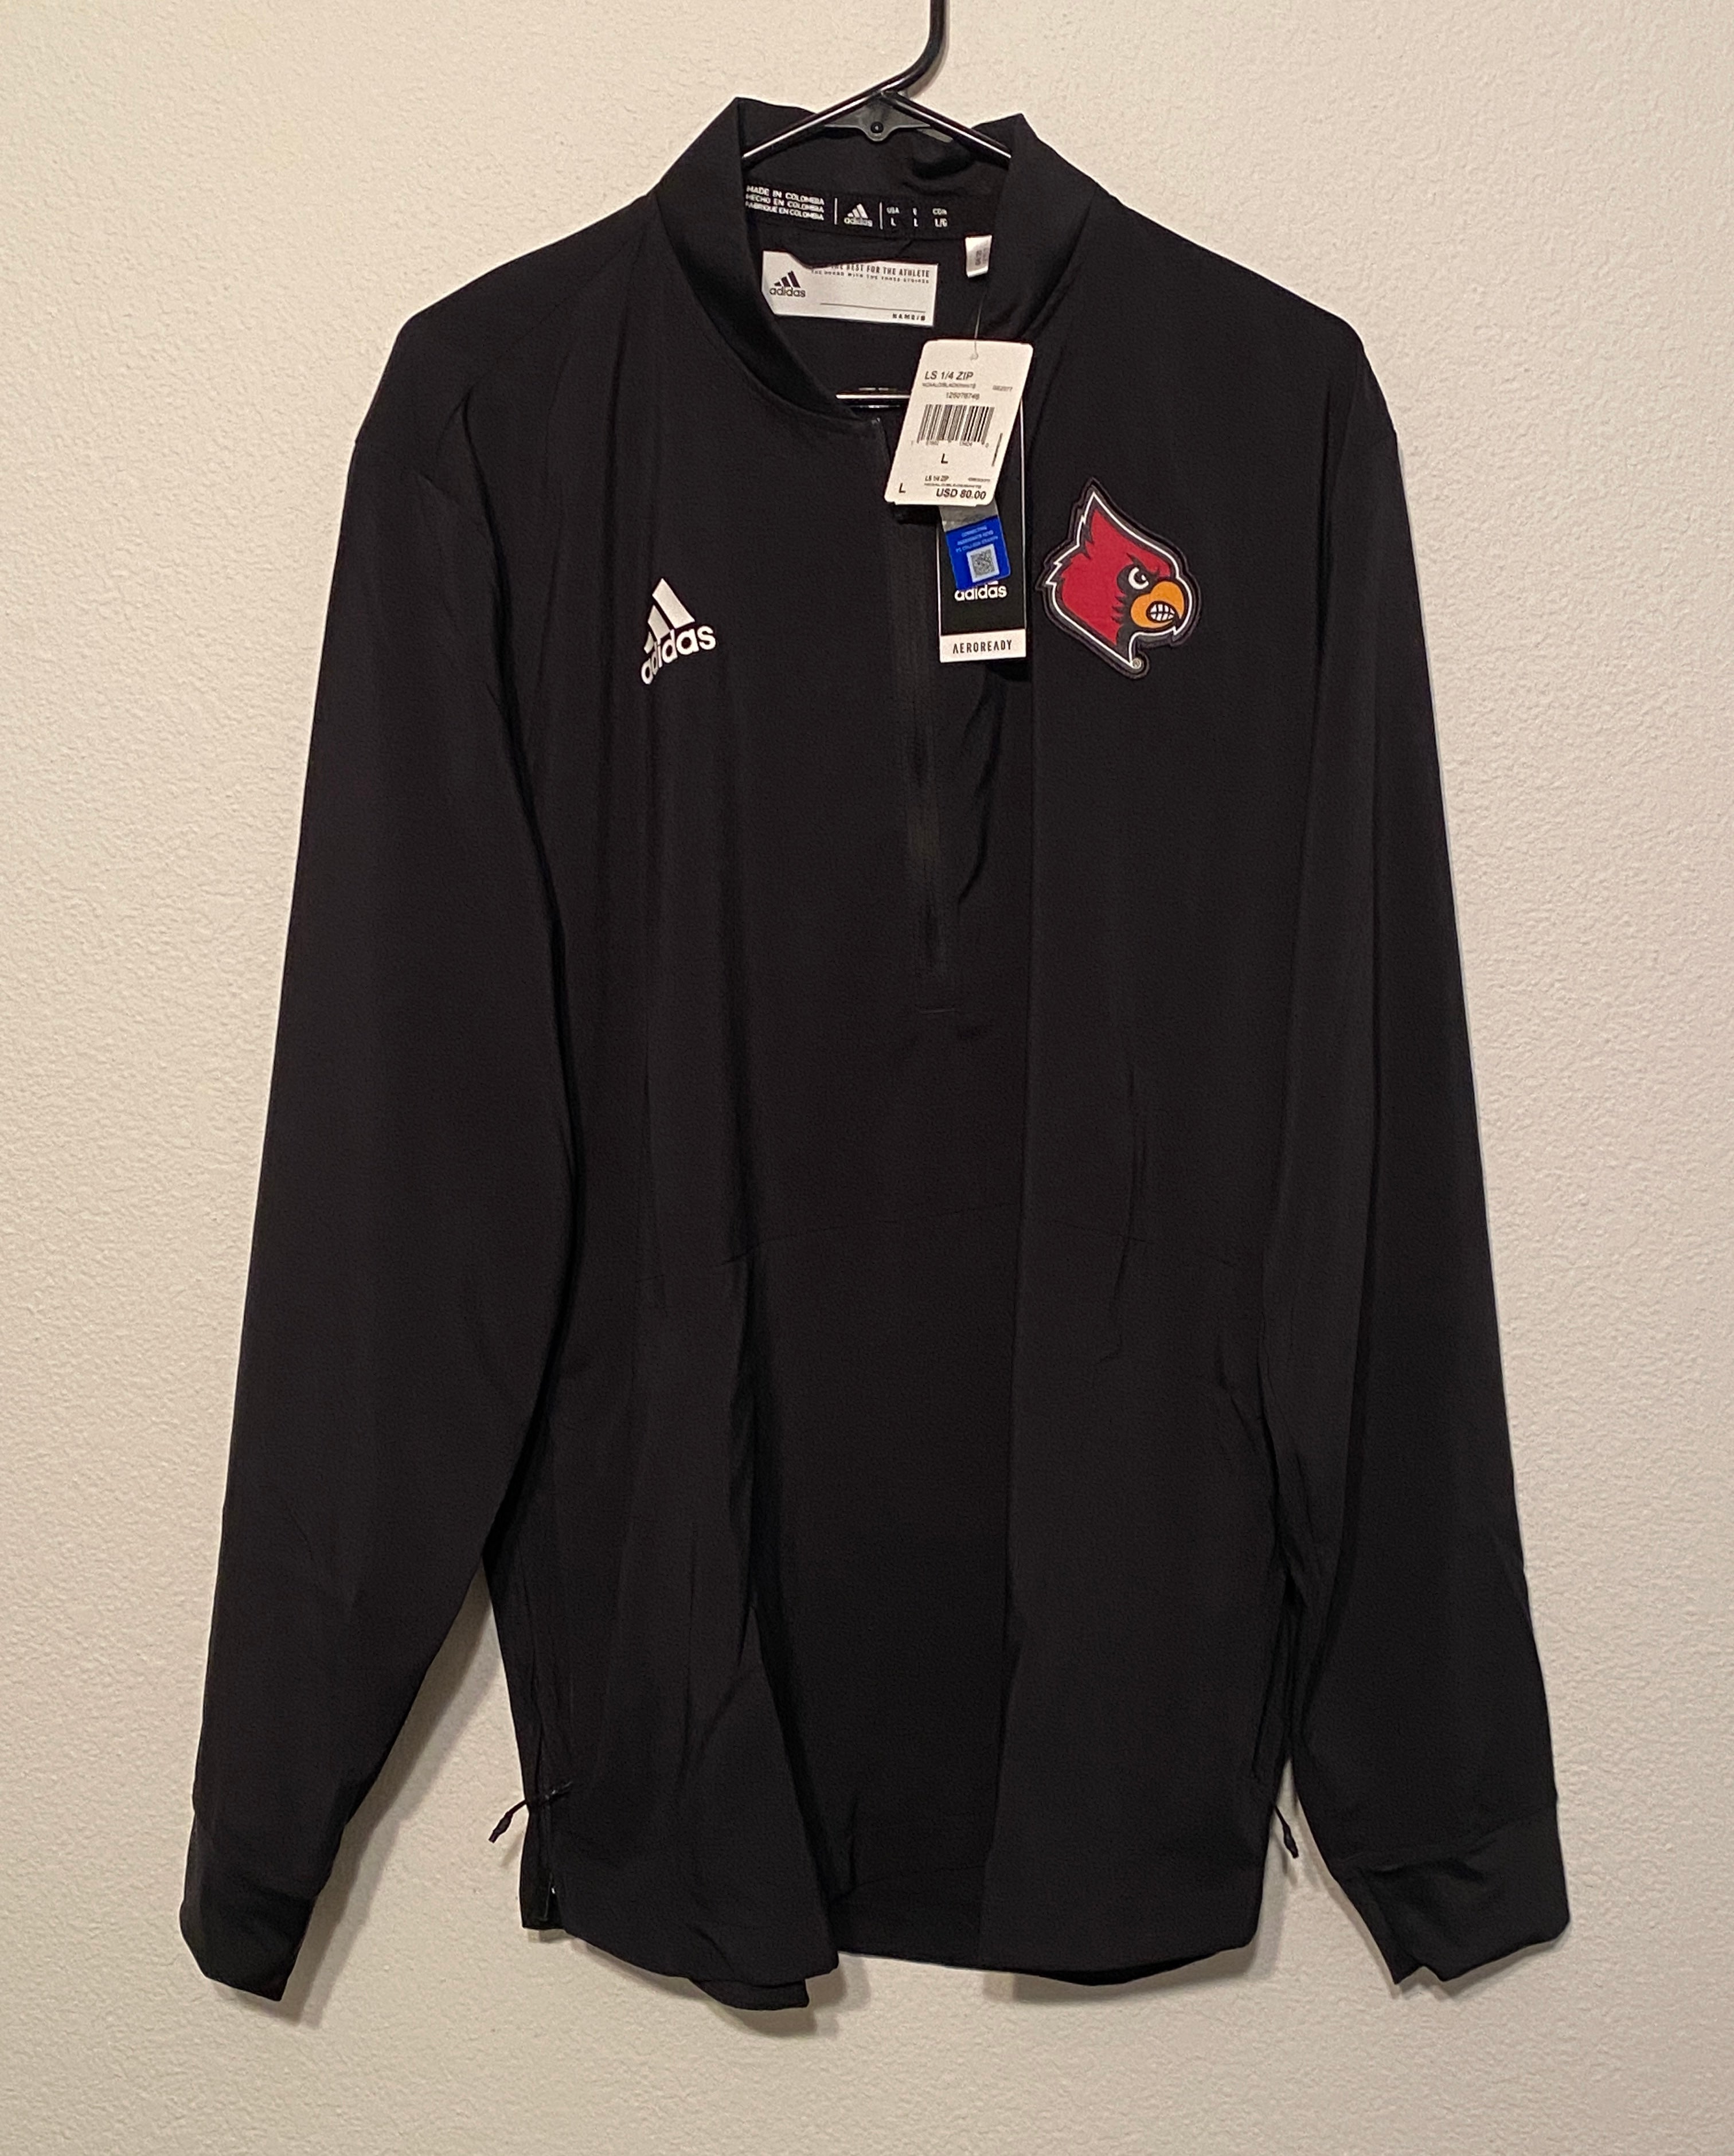 ADIDAS Louisville Cardinals Sideline Jacket- L- NEW- $80 AeroReady 1/4 zip  coat